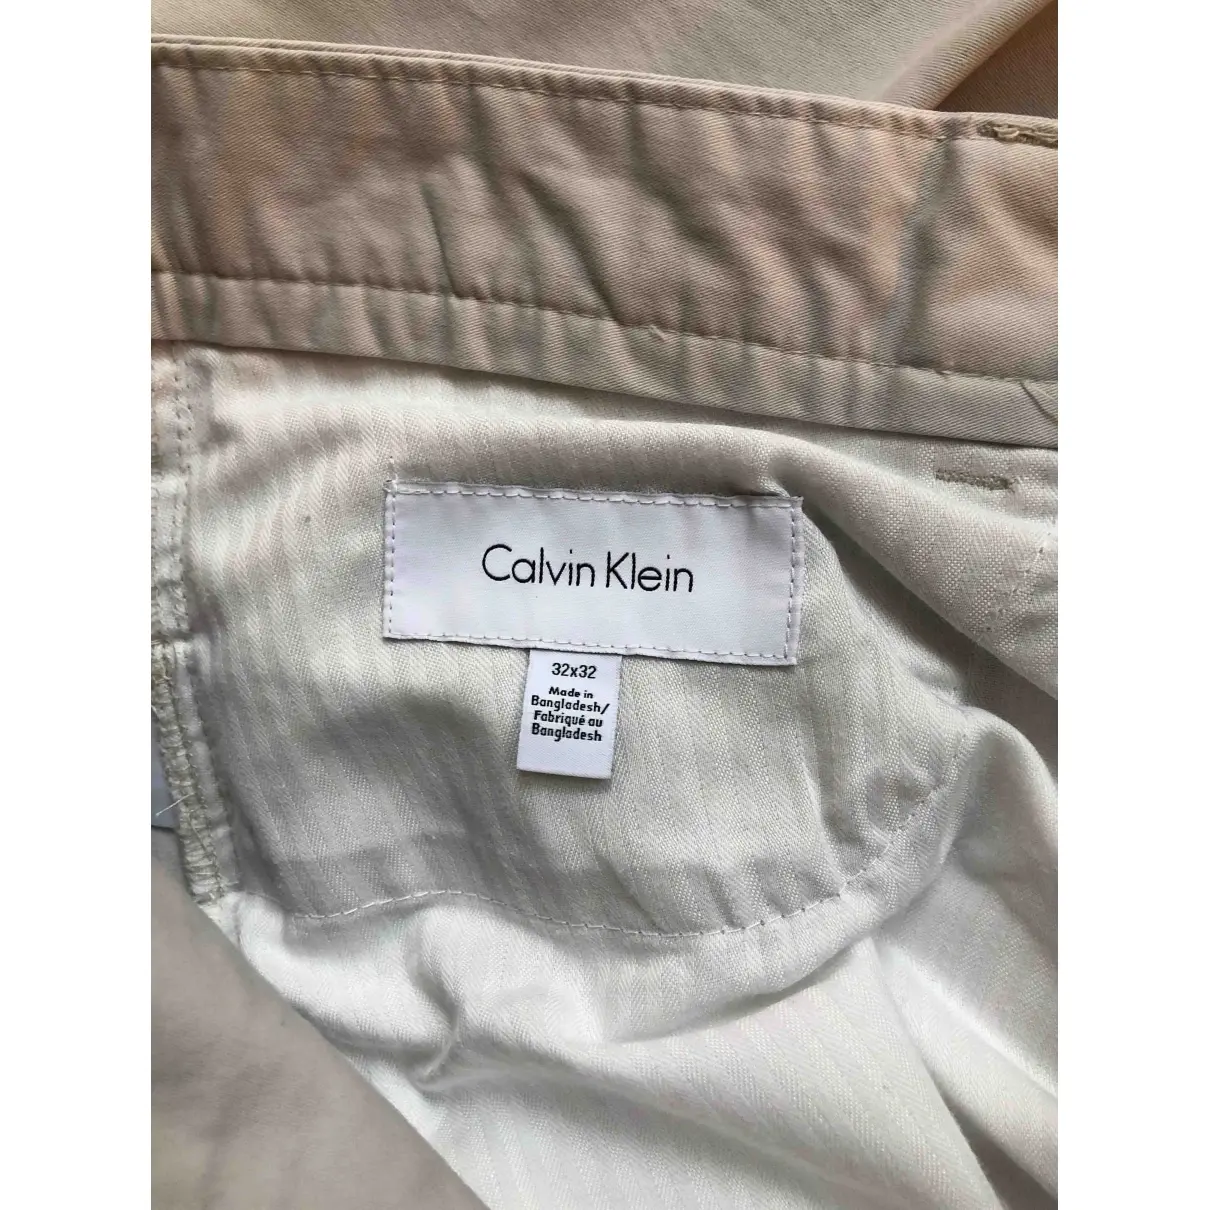 Buy Calvin Klein Trousers online